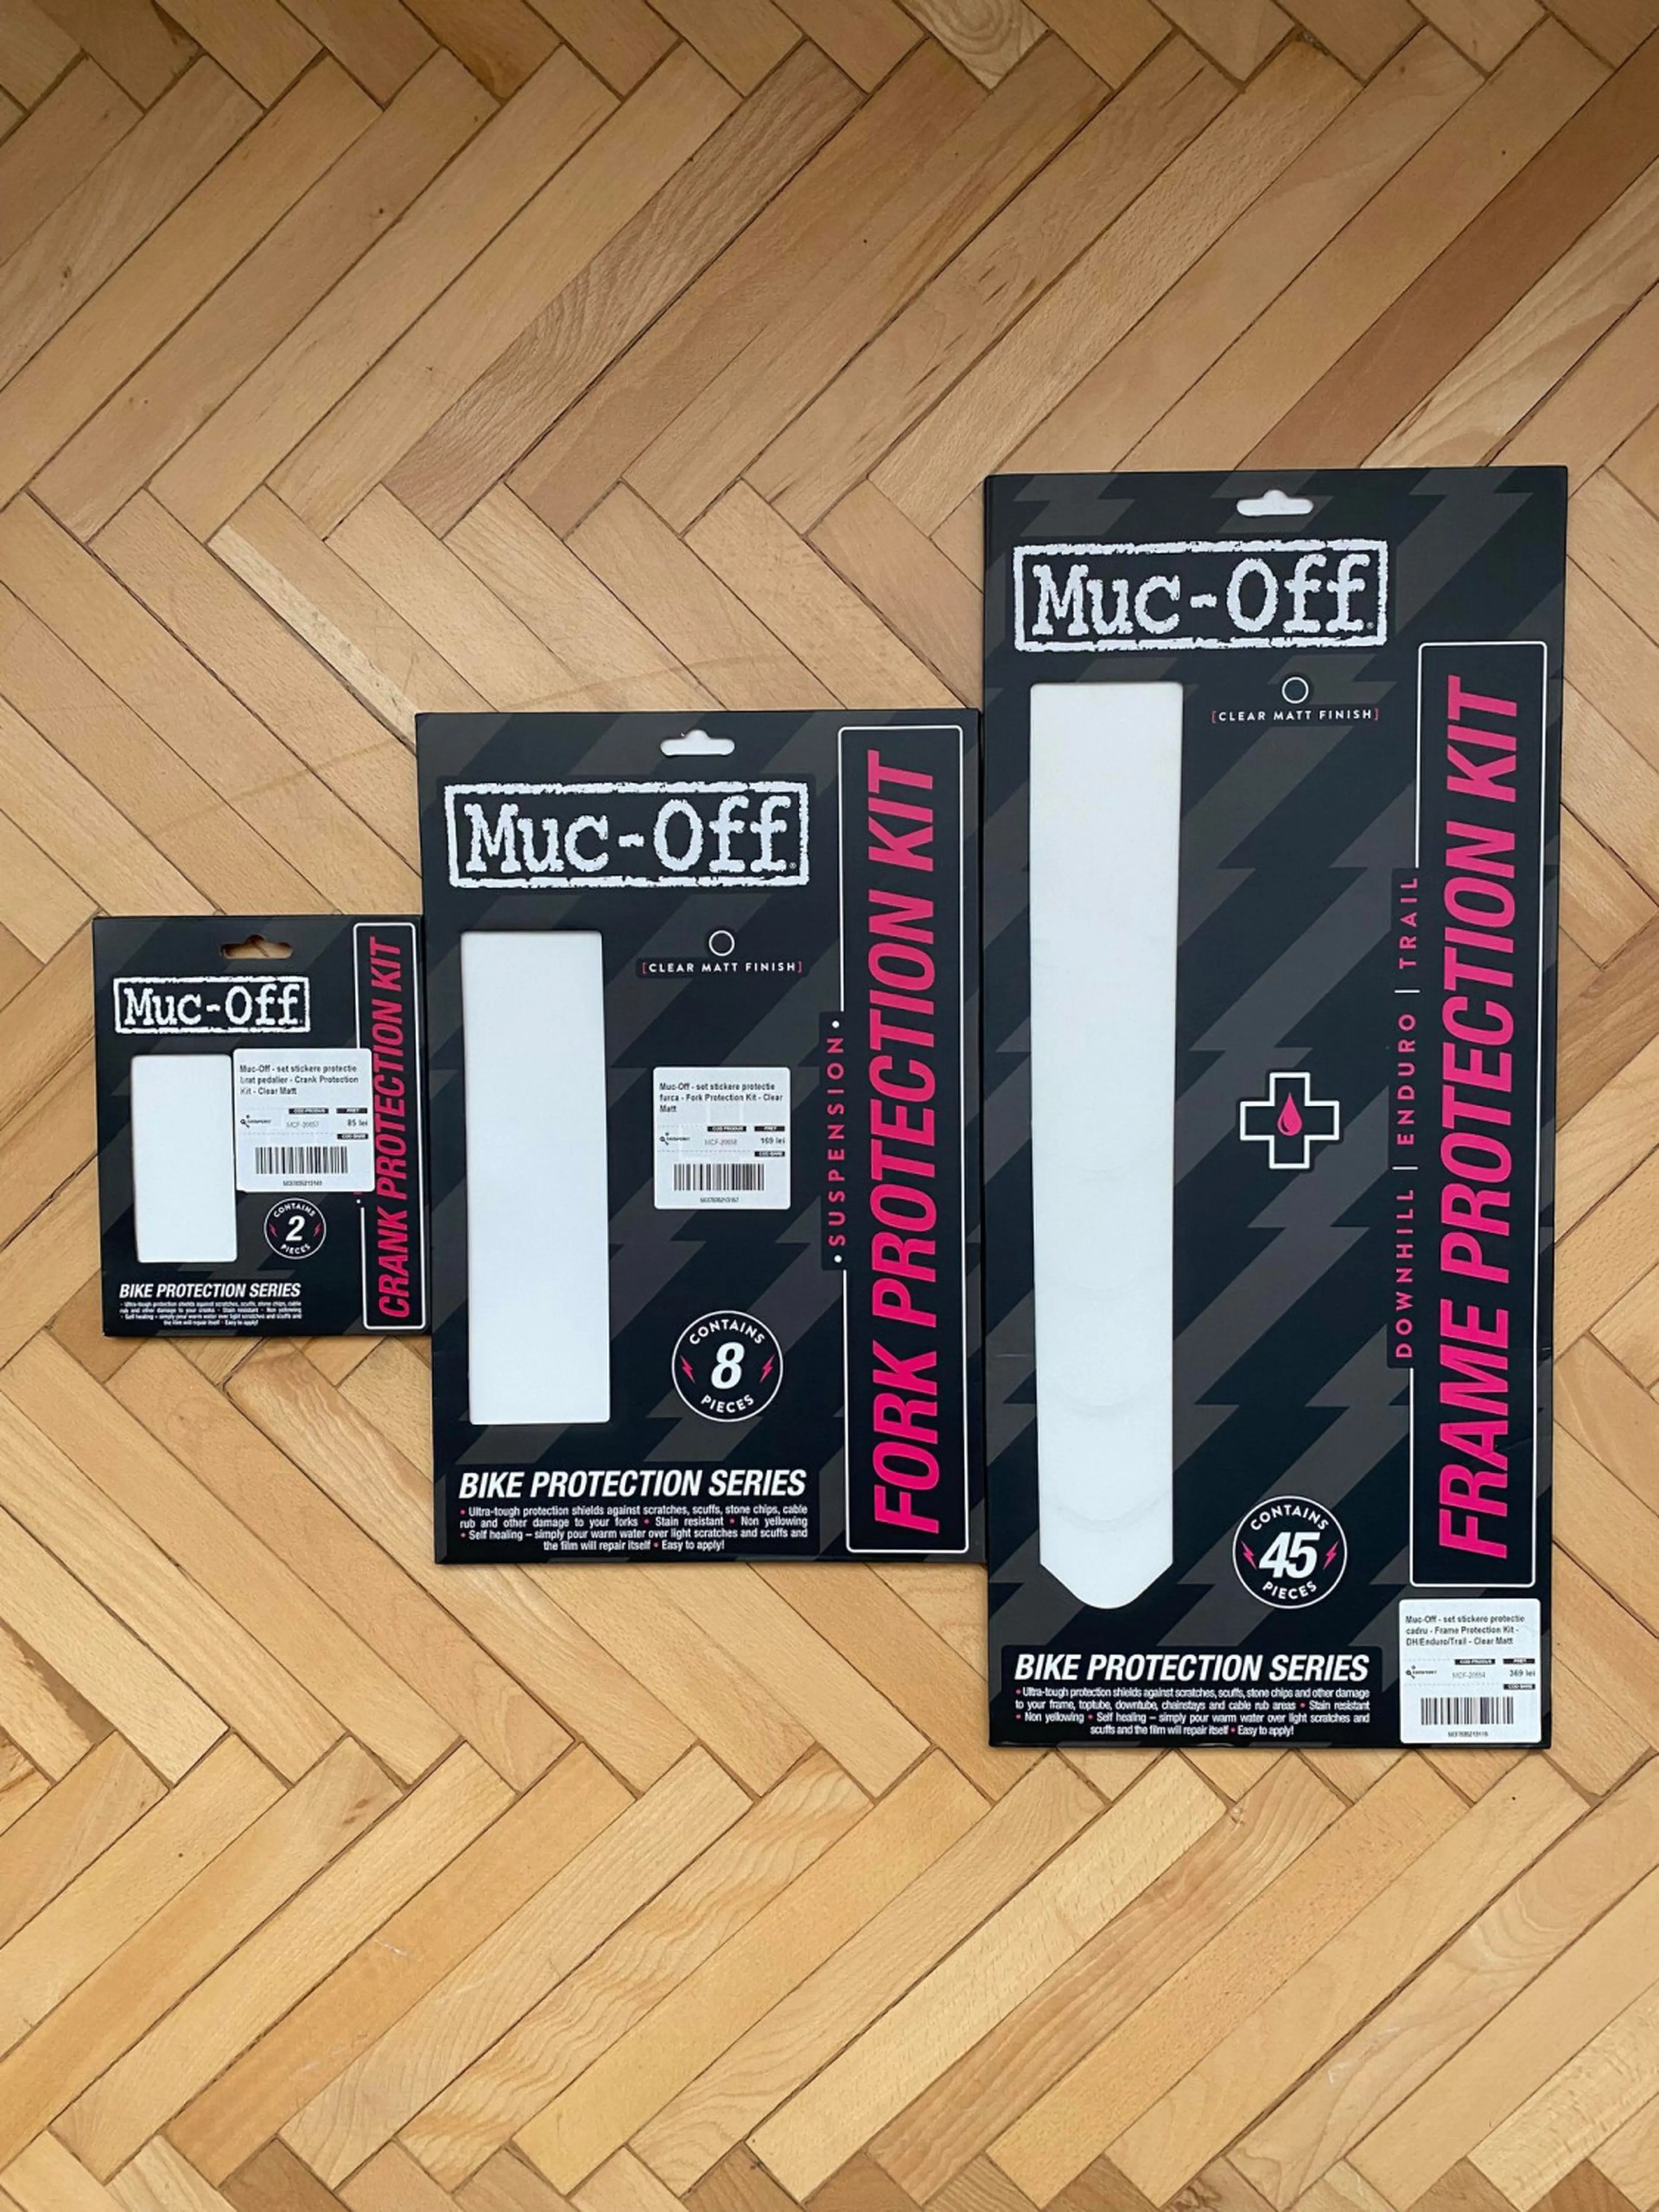 Image Set stickere Muc-Off pentru protectie piese bicicleta